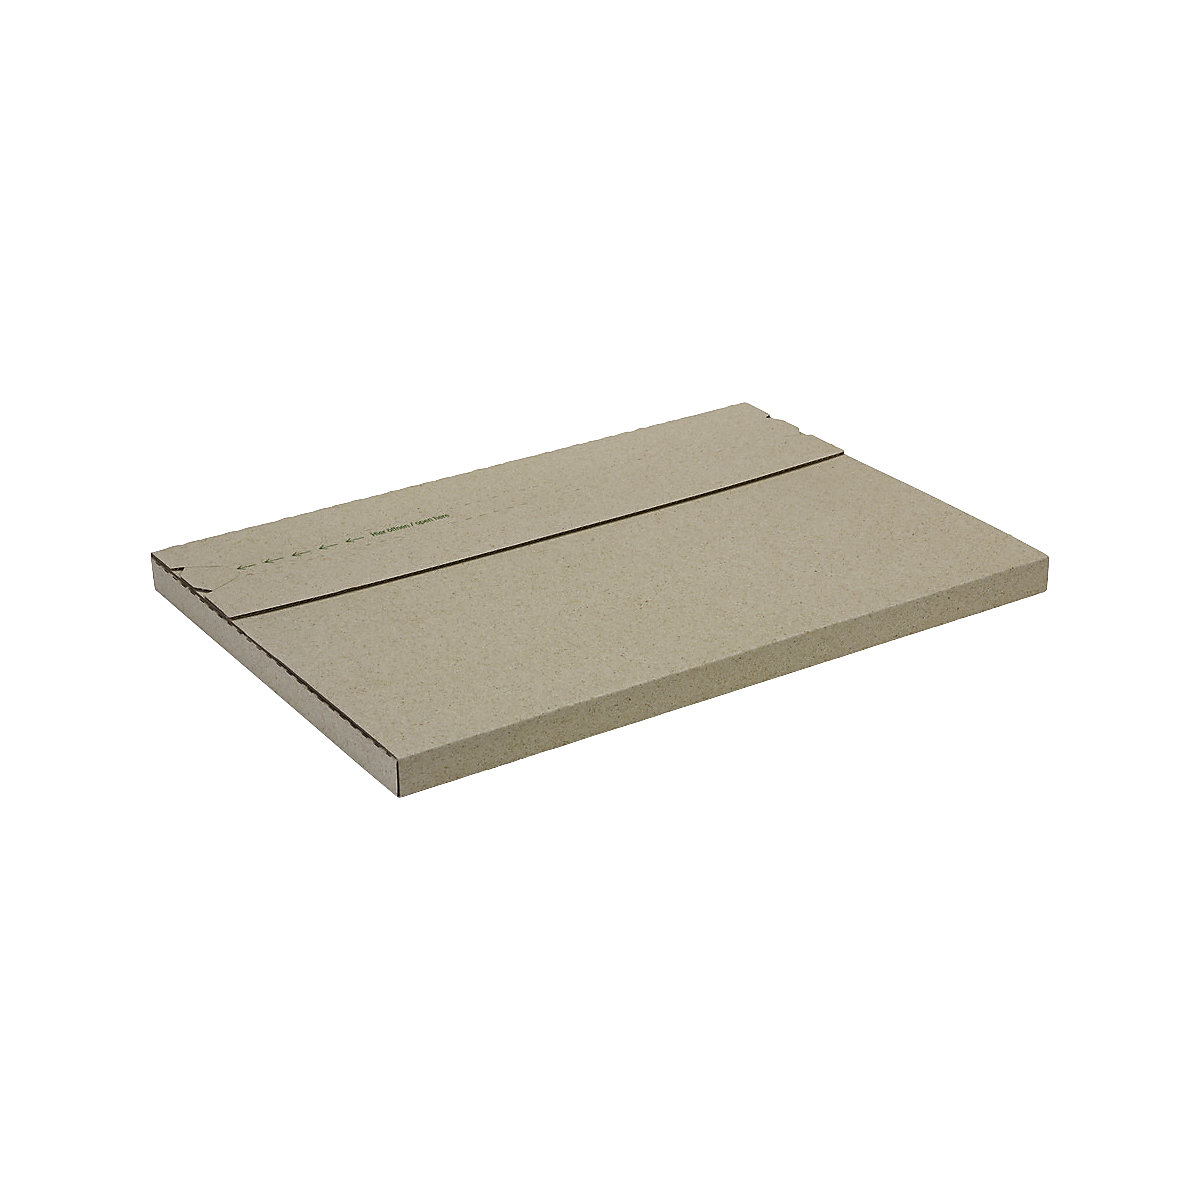 Graspapier-Flachpack terra, selbstklebend, Innen-LxBxH 349 x 246 x 15 mm, ab 200 Stk-1